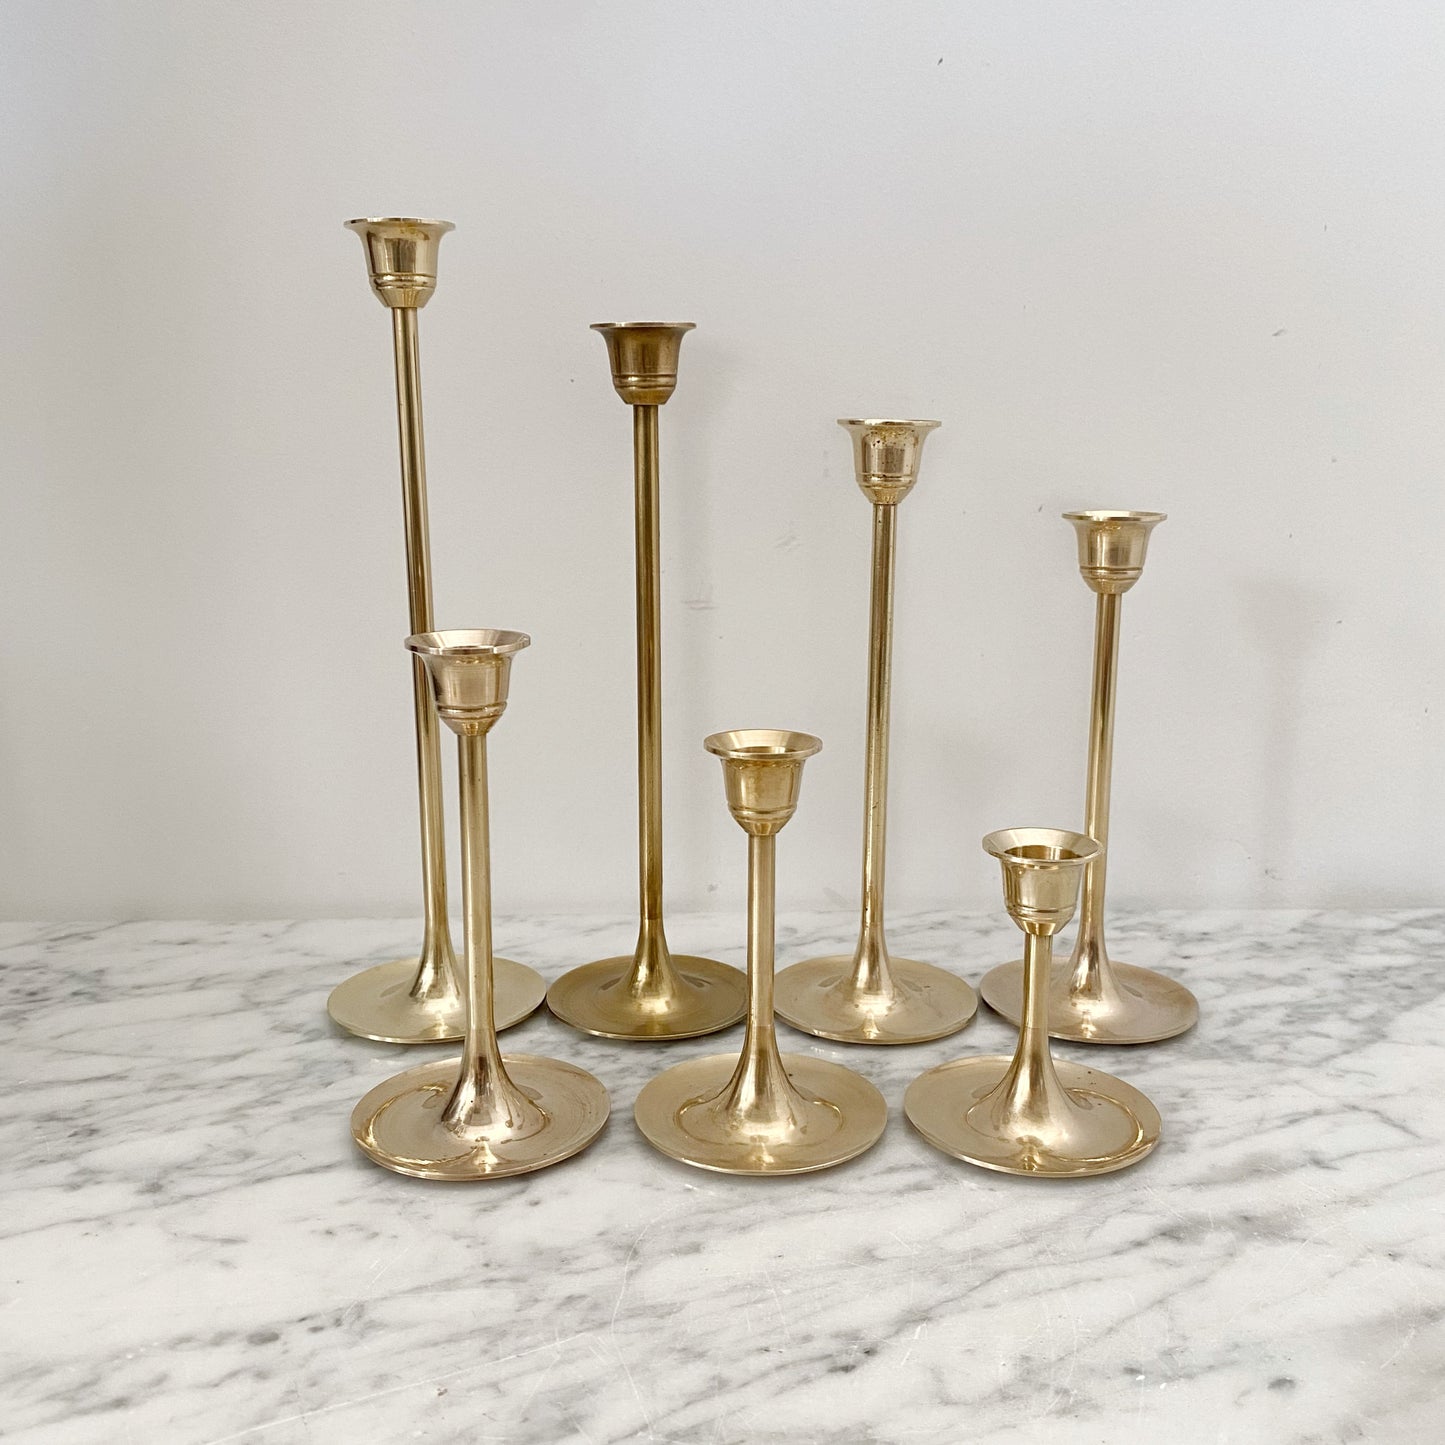 Collection of 7 Vintage Slender Brass Candlestick Holders